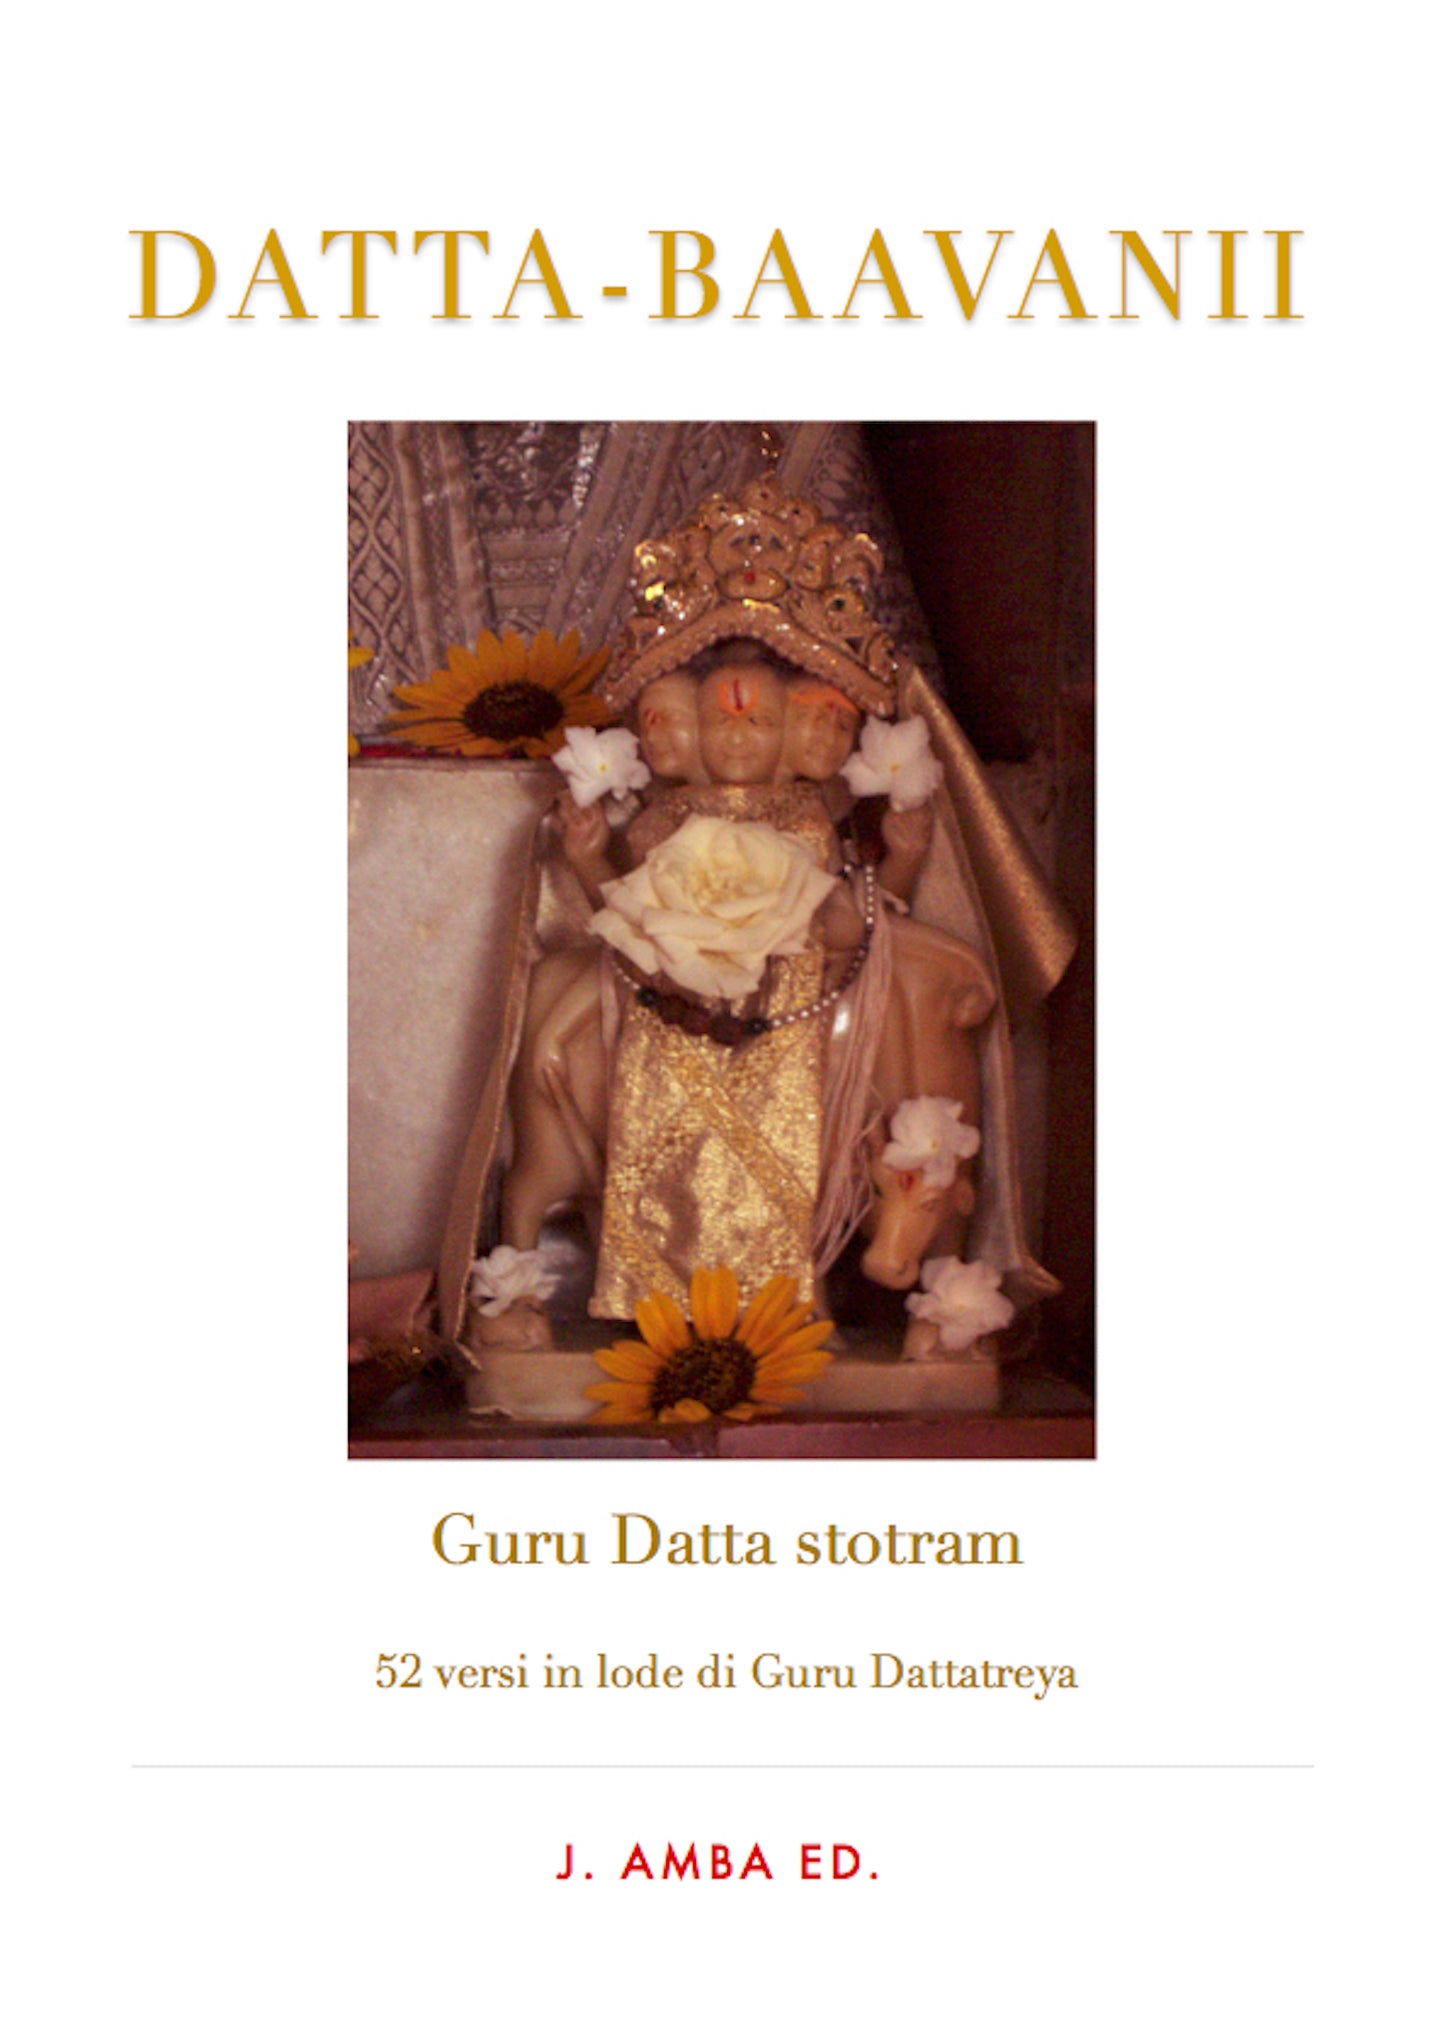 Datta-Baavanii, Guru Datta Stotram, 52 Verses in Praise of Guru Dattatreya, Mantra - Sanatan Dharma Spirituality Book for Meditation